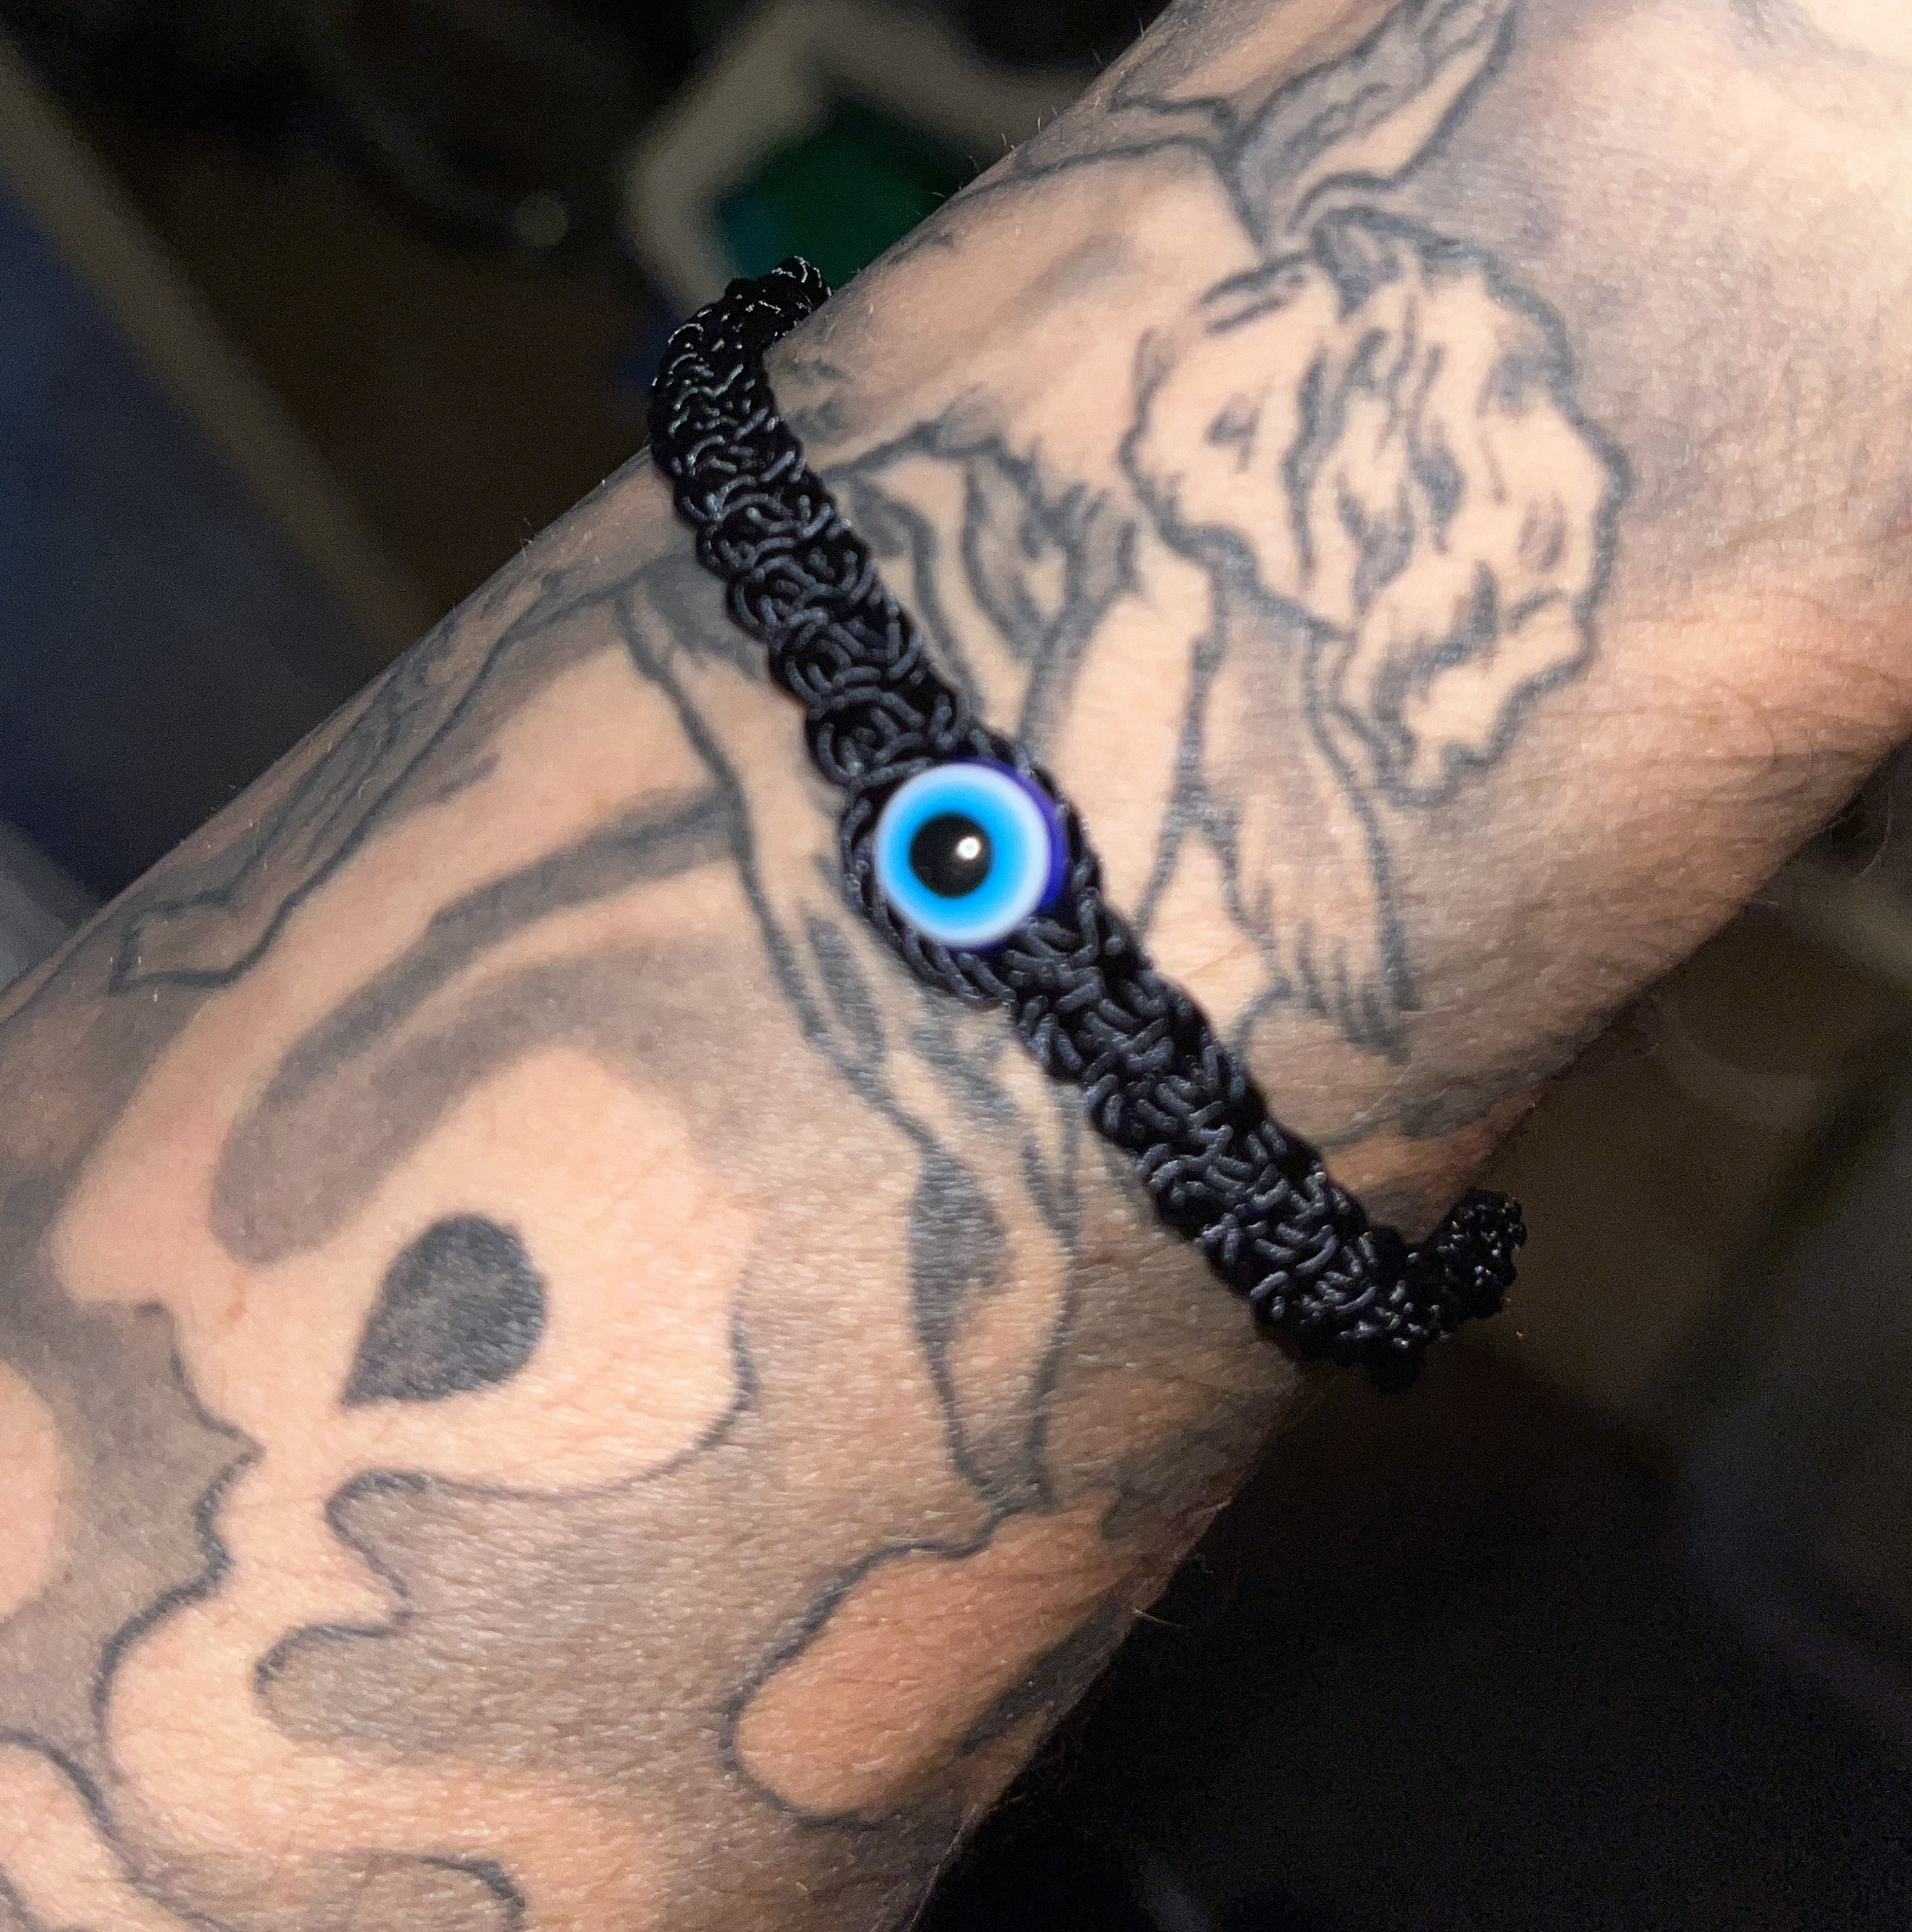 Evil Eye Silver Black American Diamond Adjustable Thread Bracelet – ZIVOM